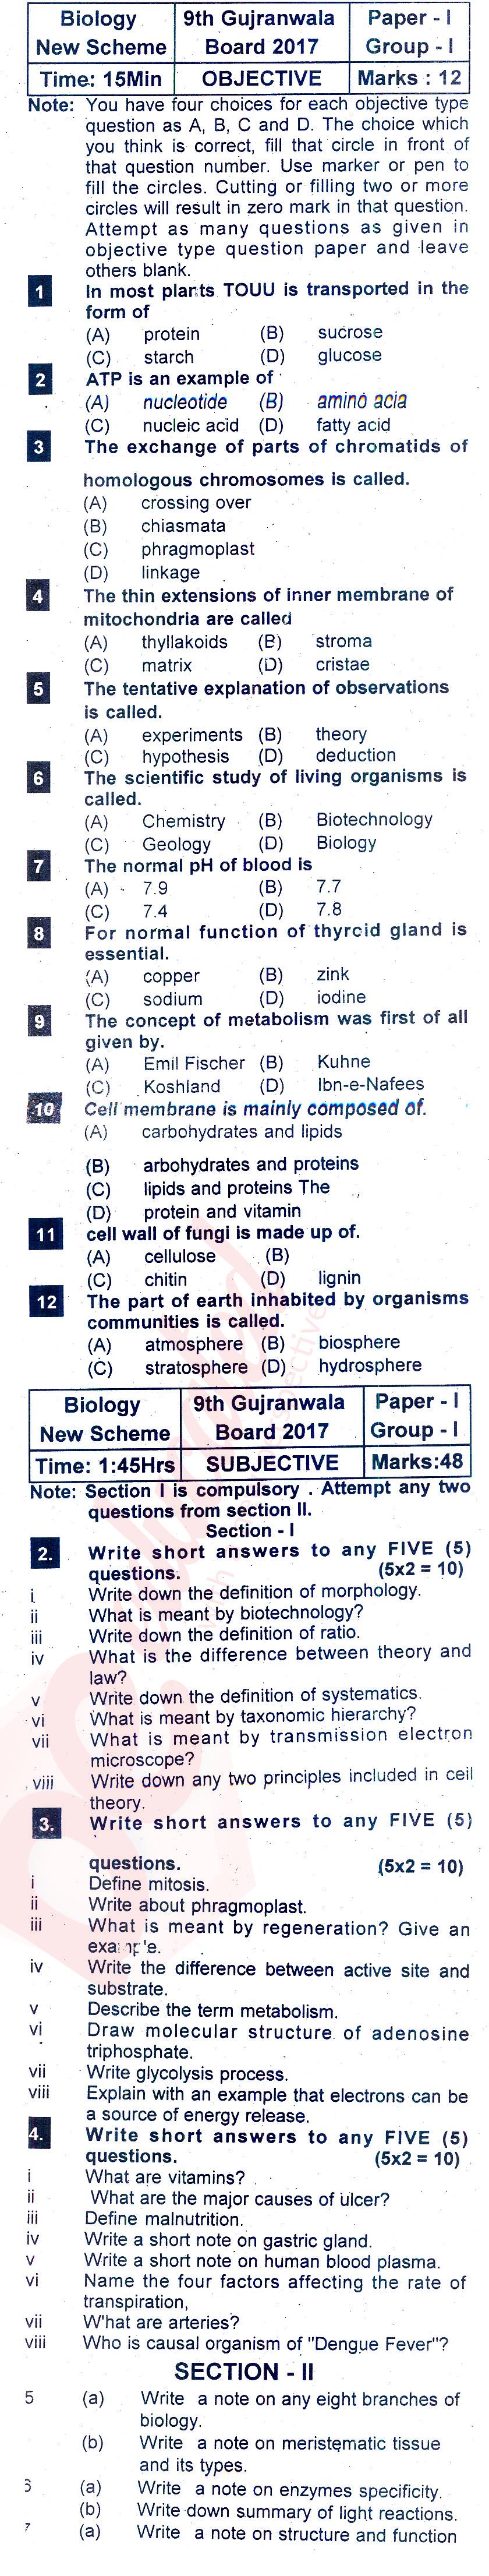 Biology 9th English Medium Past Paper Group 1 BISE Gujranwala 2017